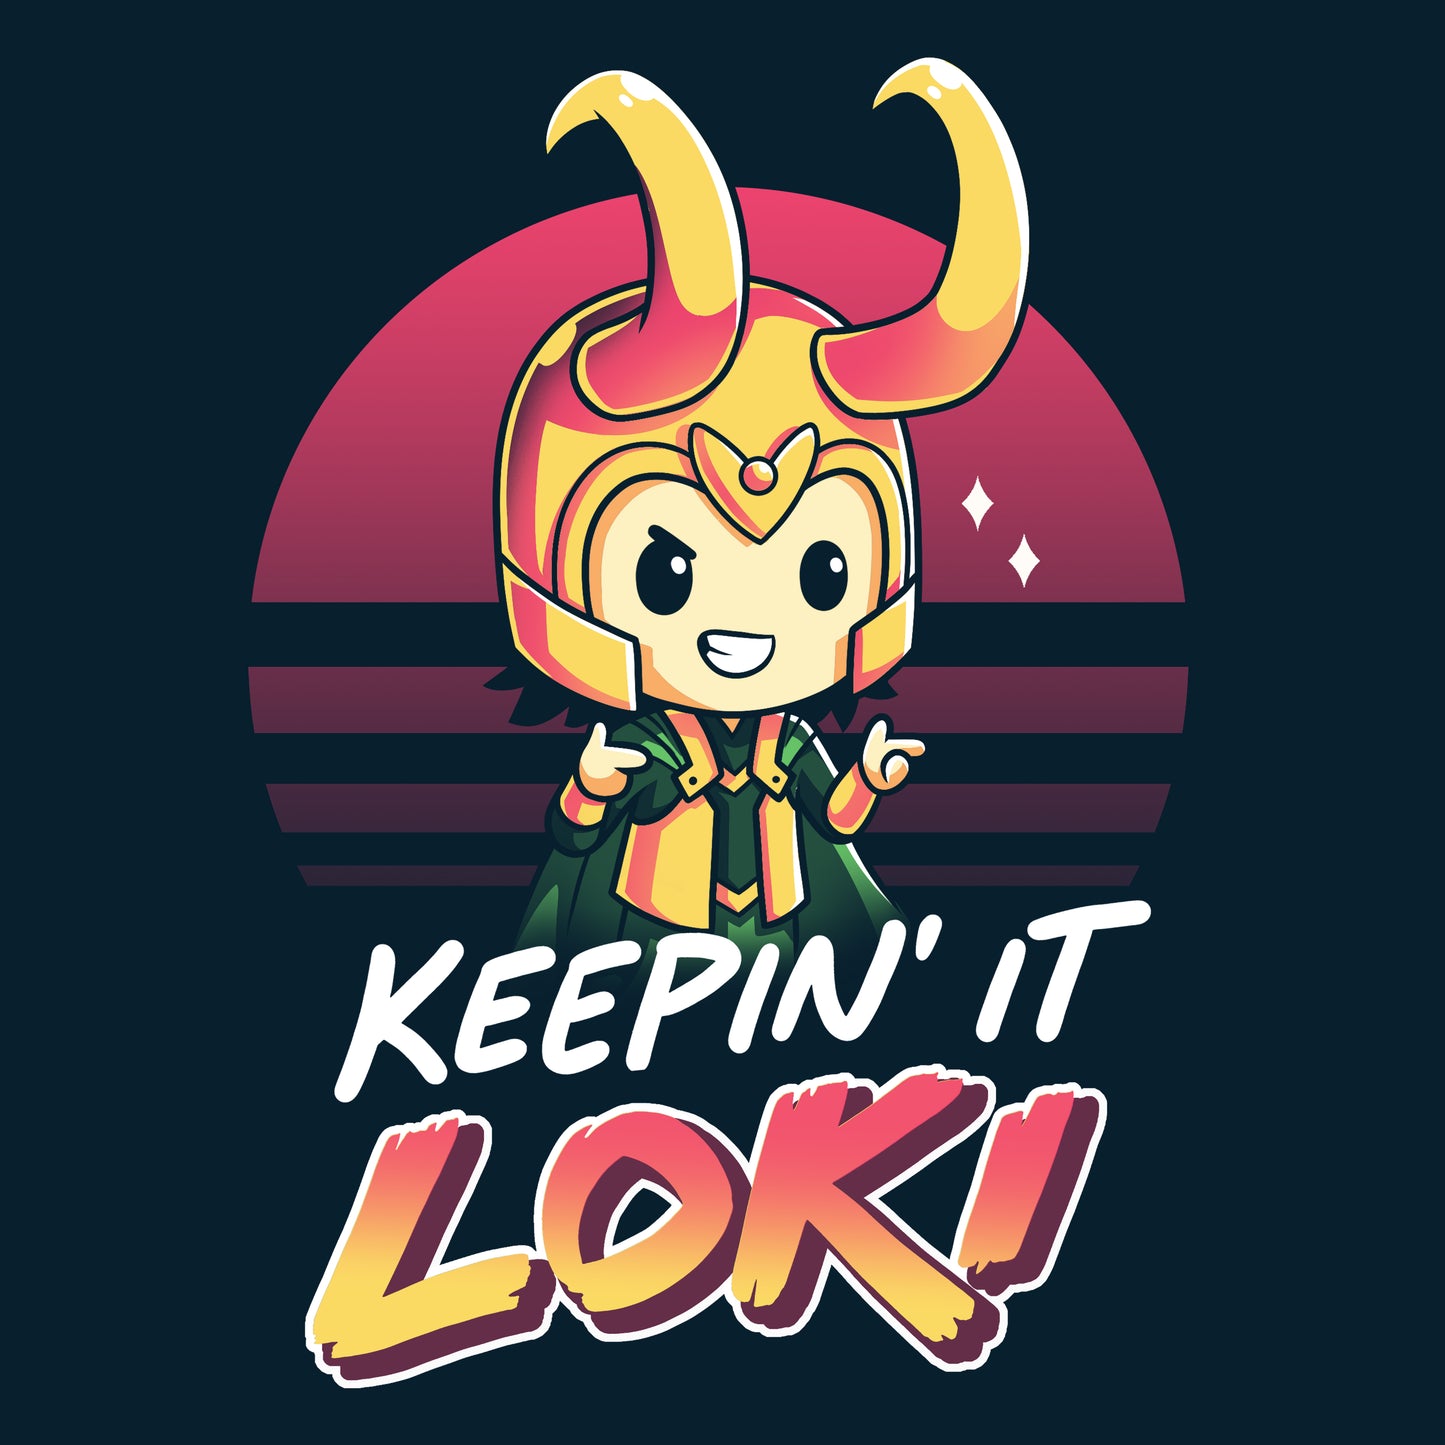 Marvel Keepin' It Loki-themed T-shirt.